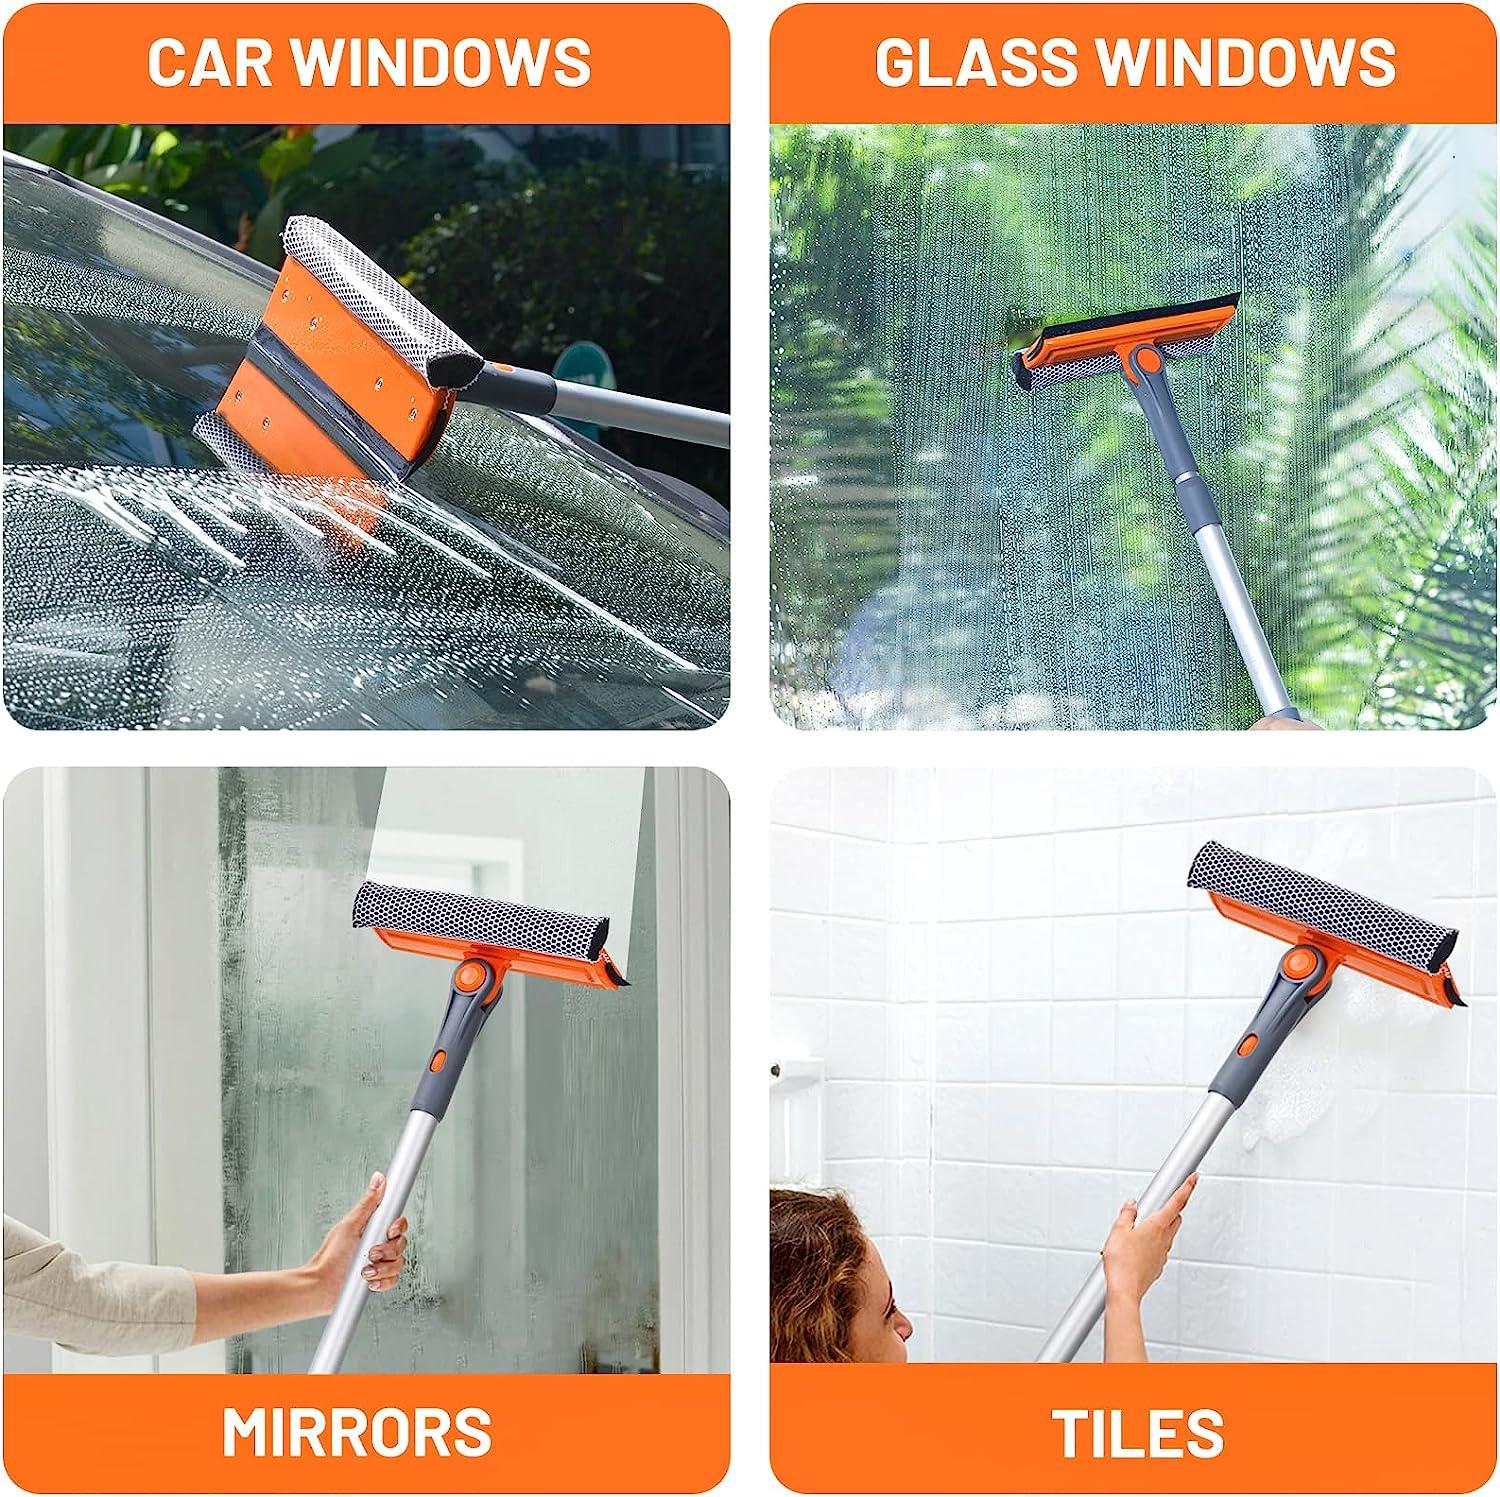 eazer Professional Window Squeegee, 2-in-1 Window Cleaner Tool